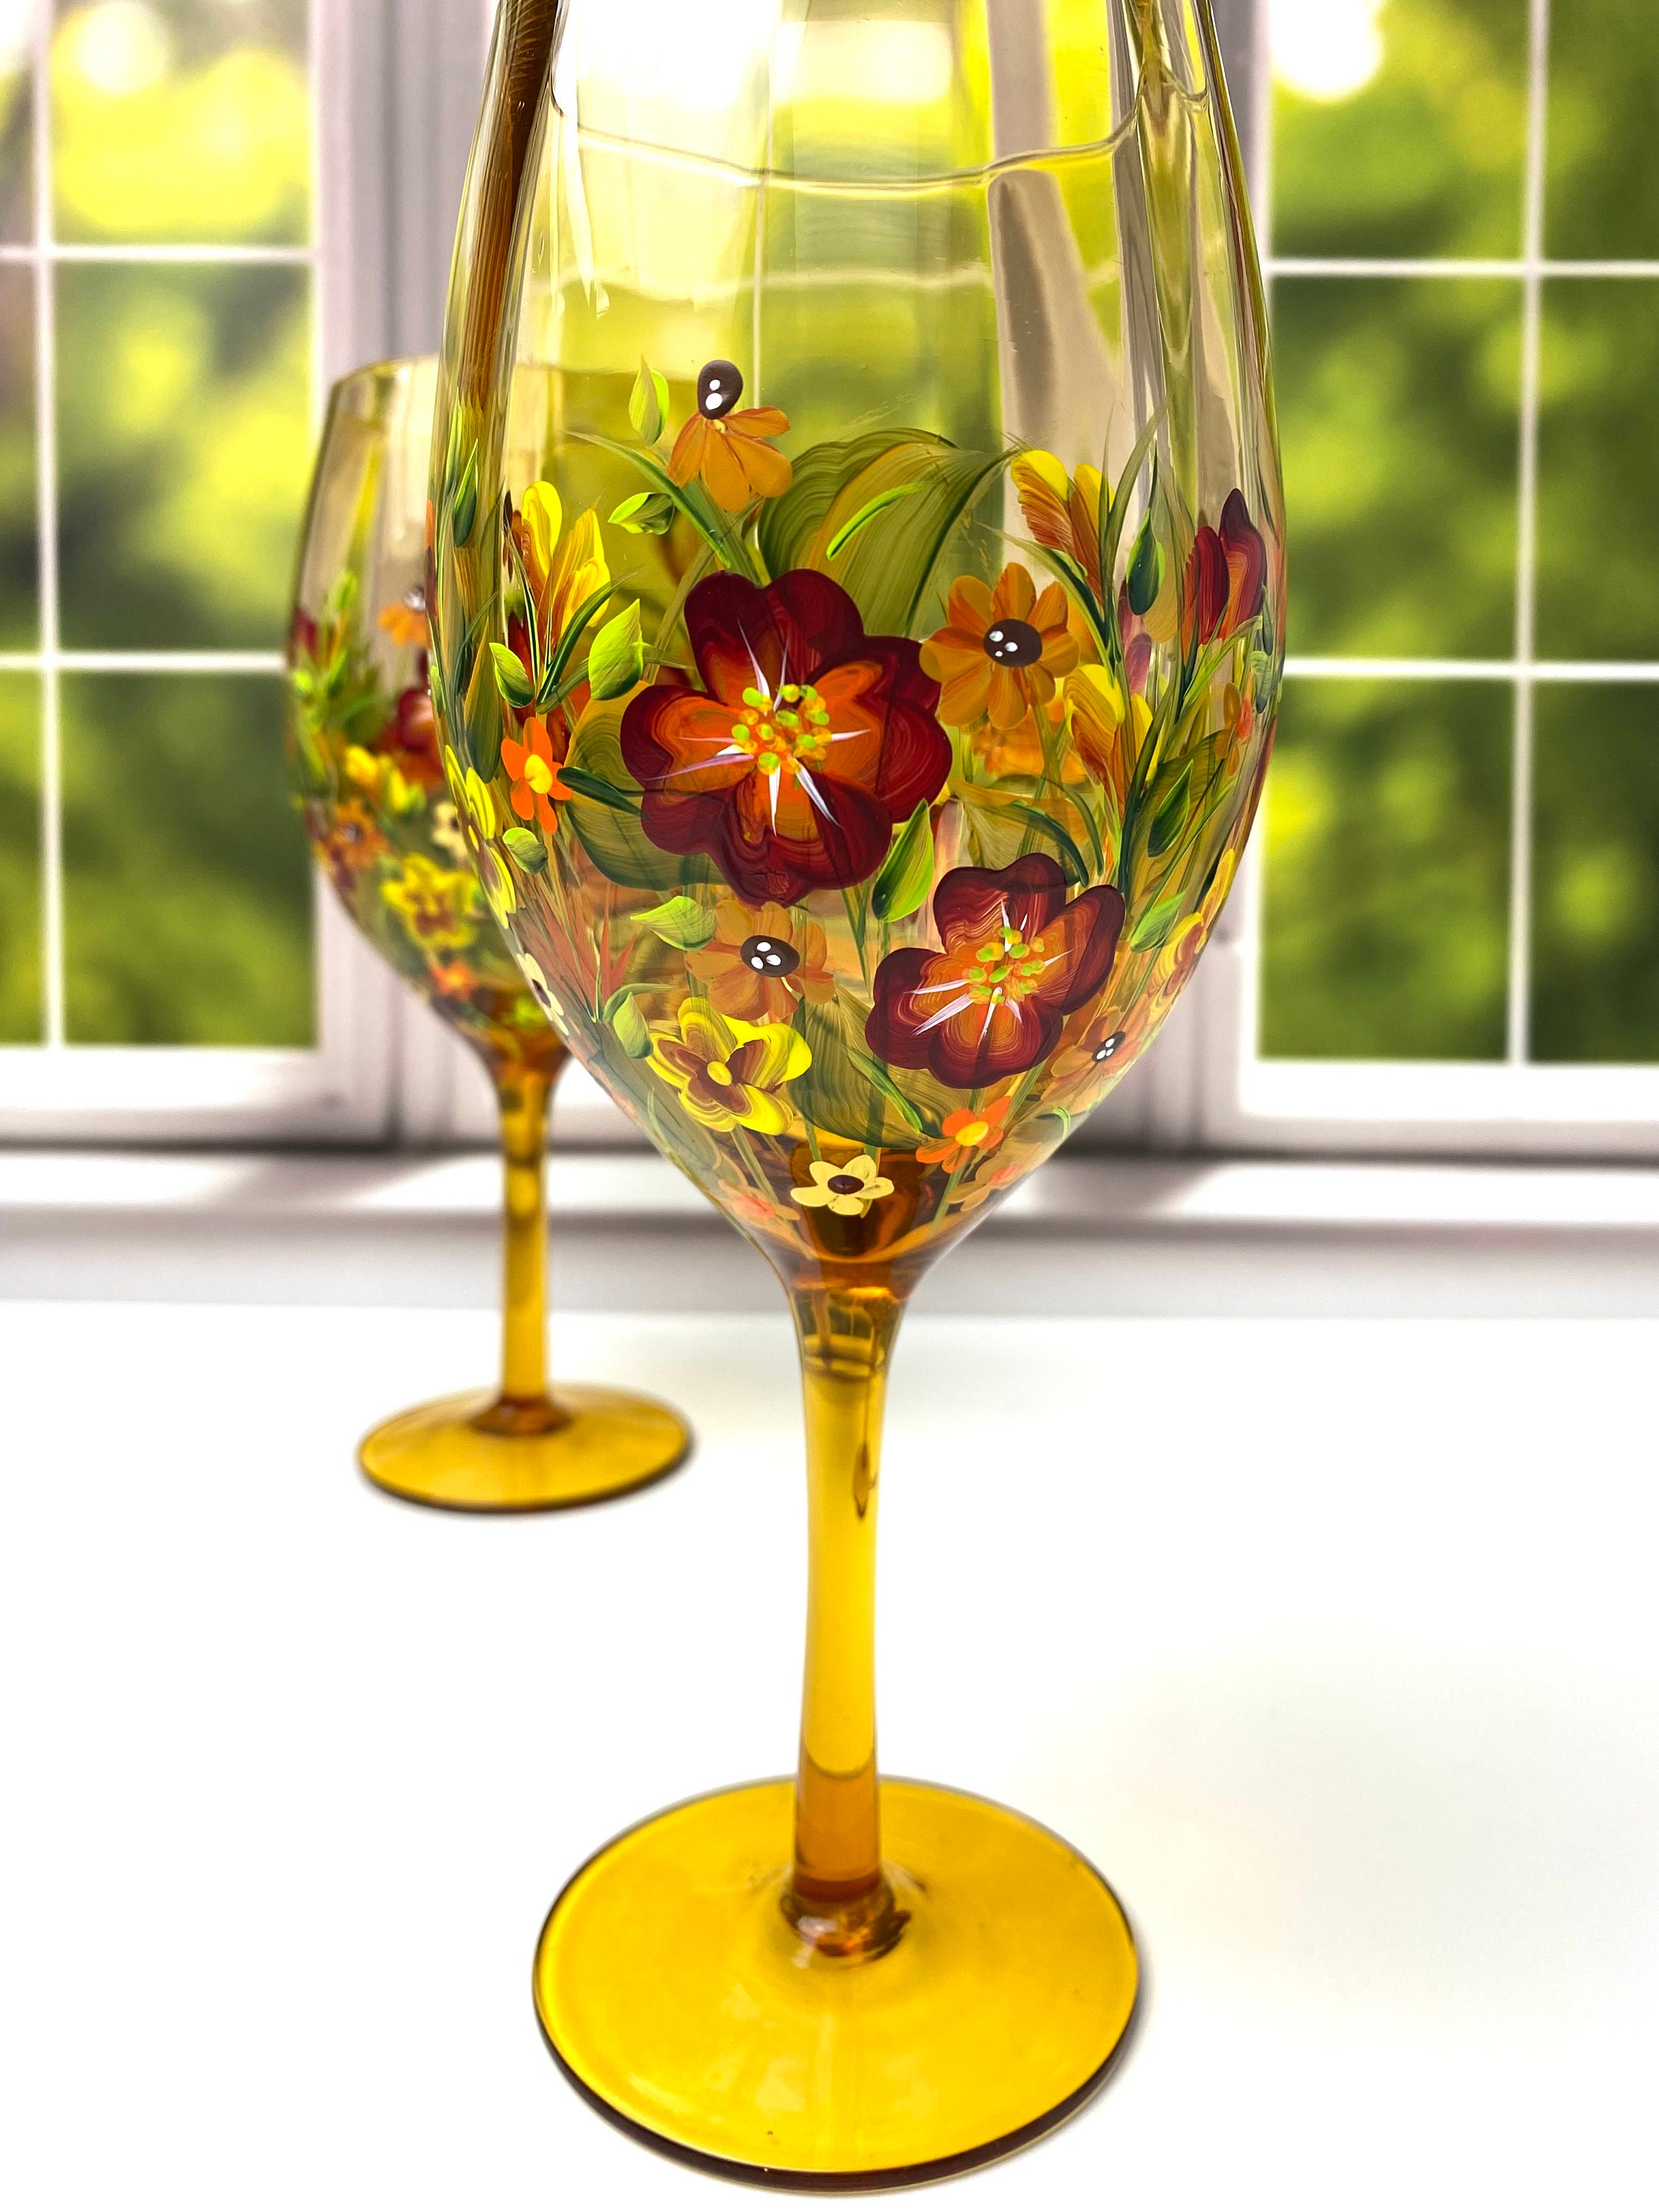 Aperitivo Triangular Wine Glass, Set of 4 - Nest Fine Gifts and Interiors